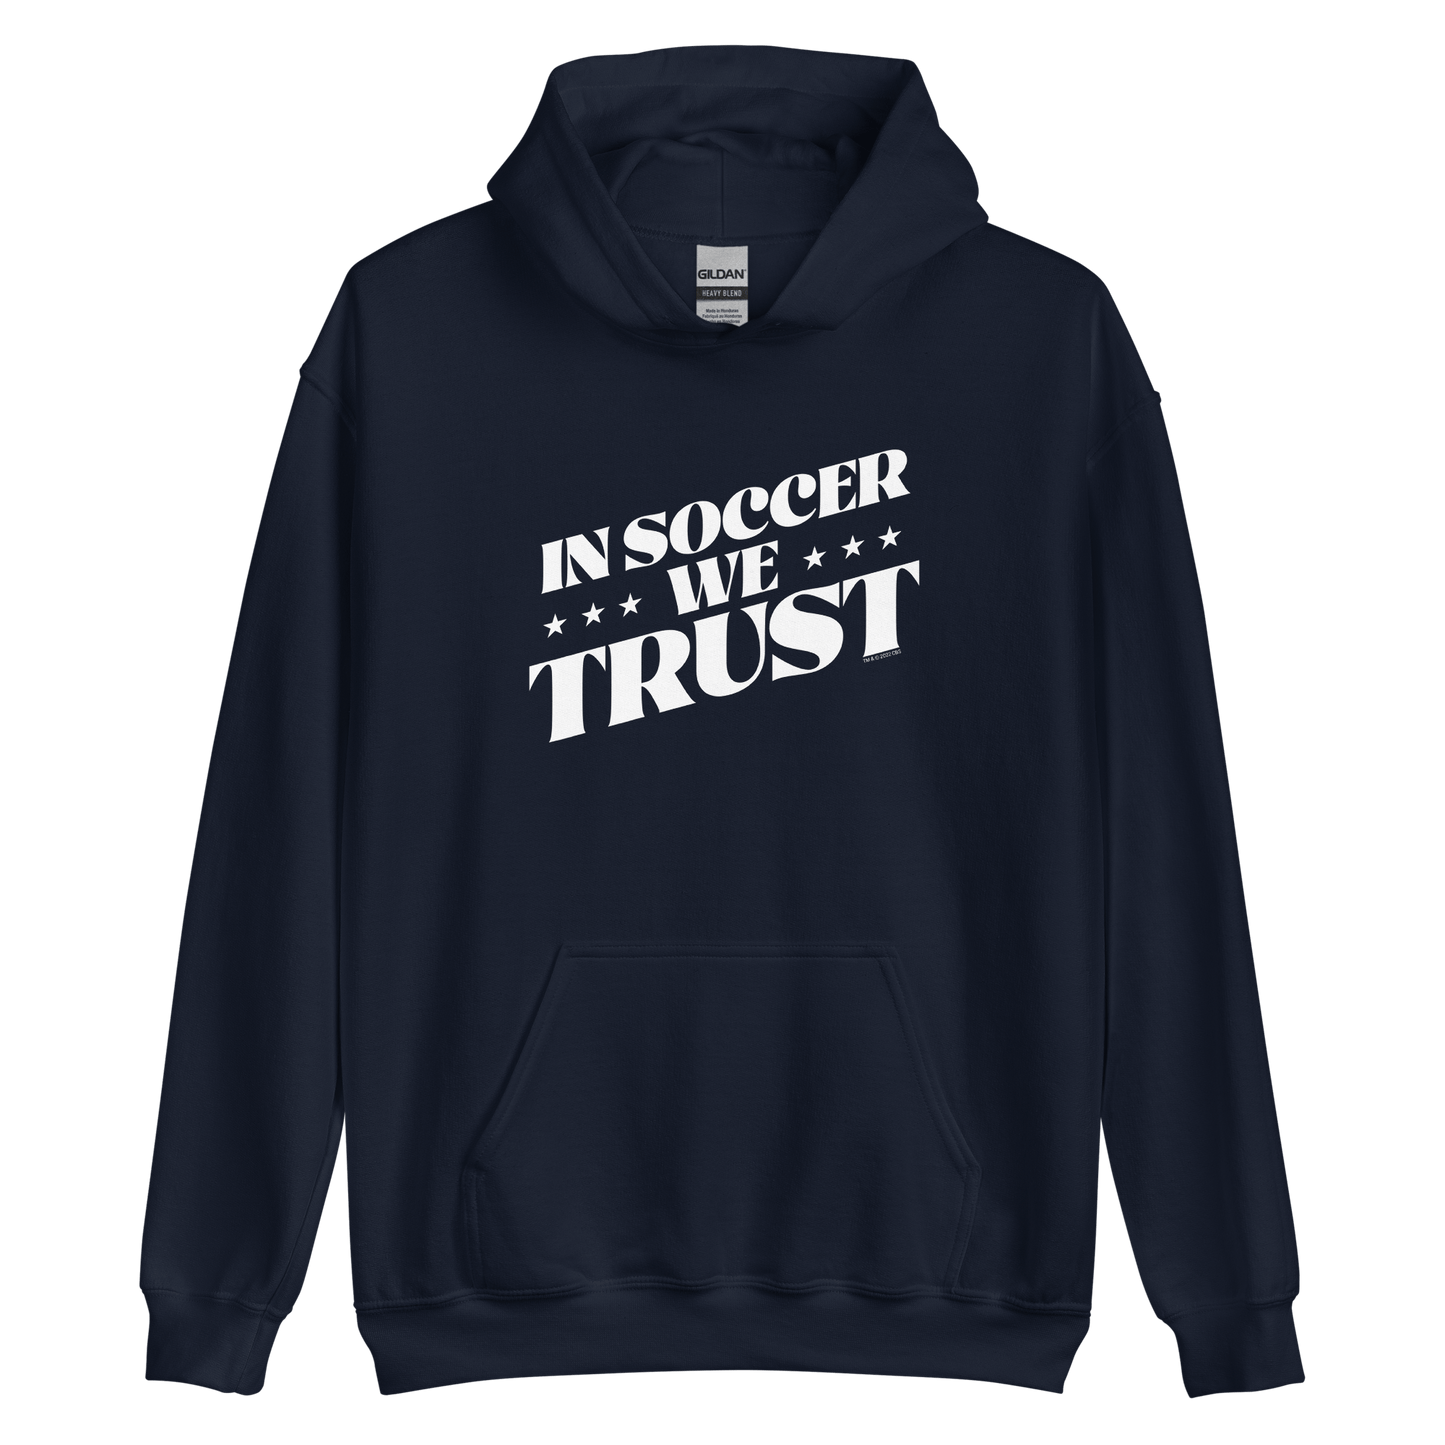 In Soccer We Trust Podcast Logo Hooded Sweatshirt - Paramount Shop